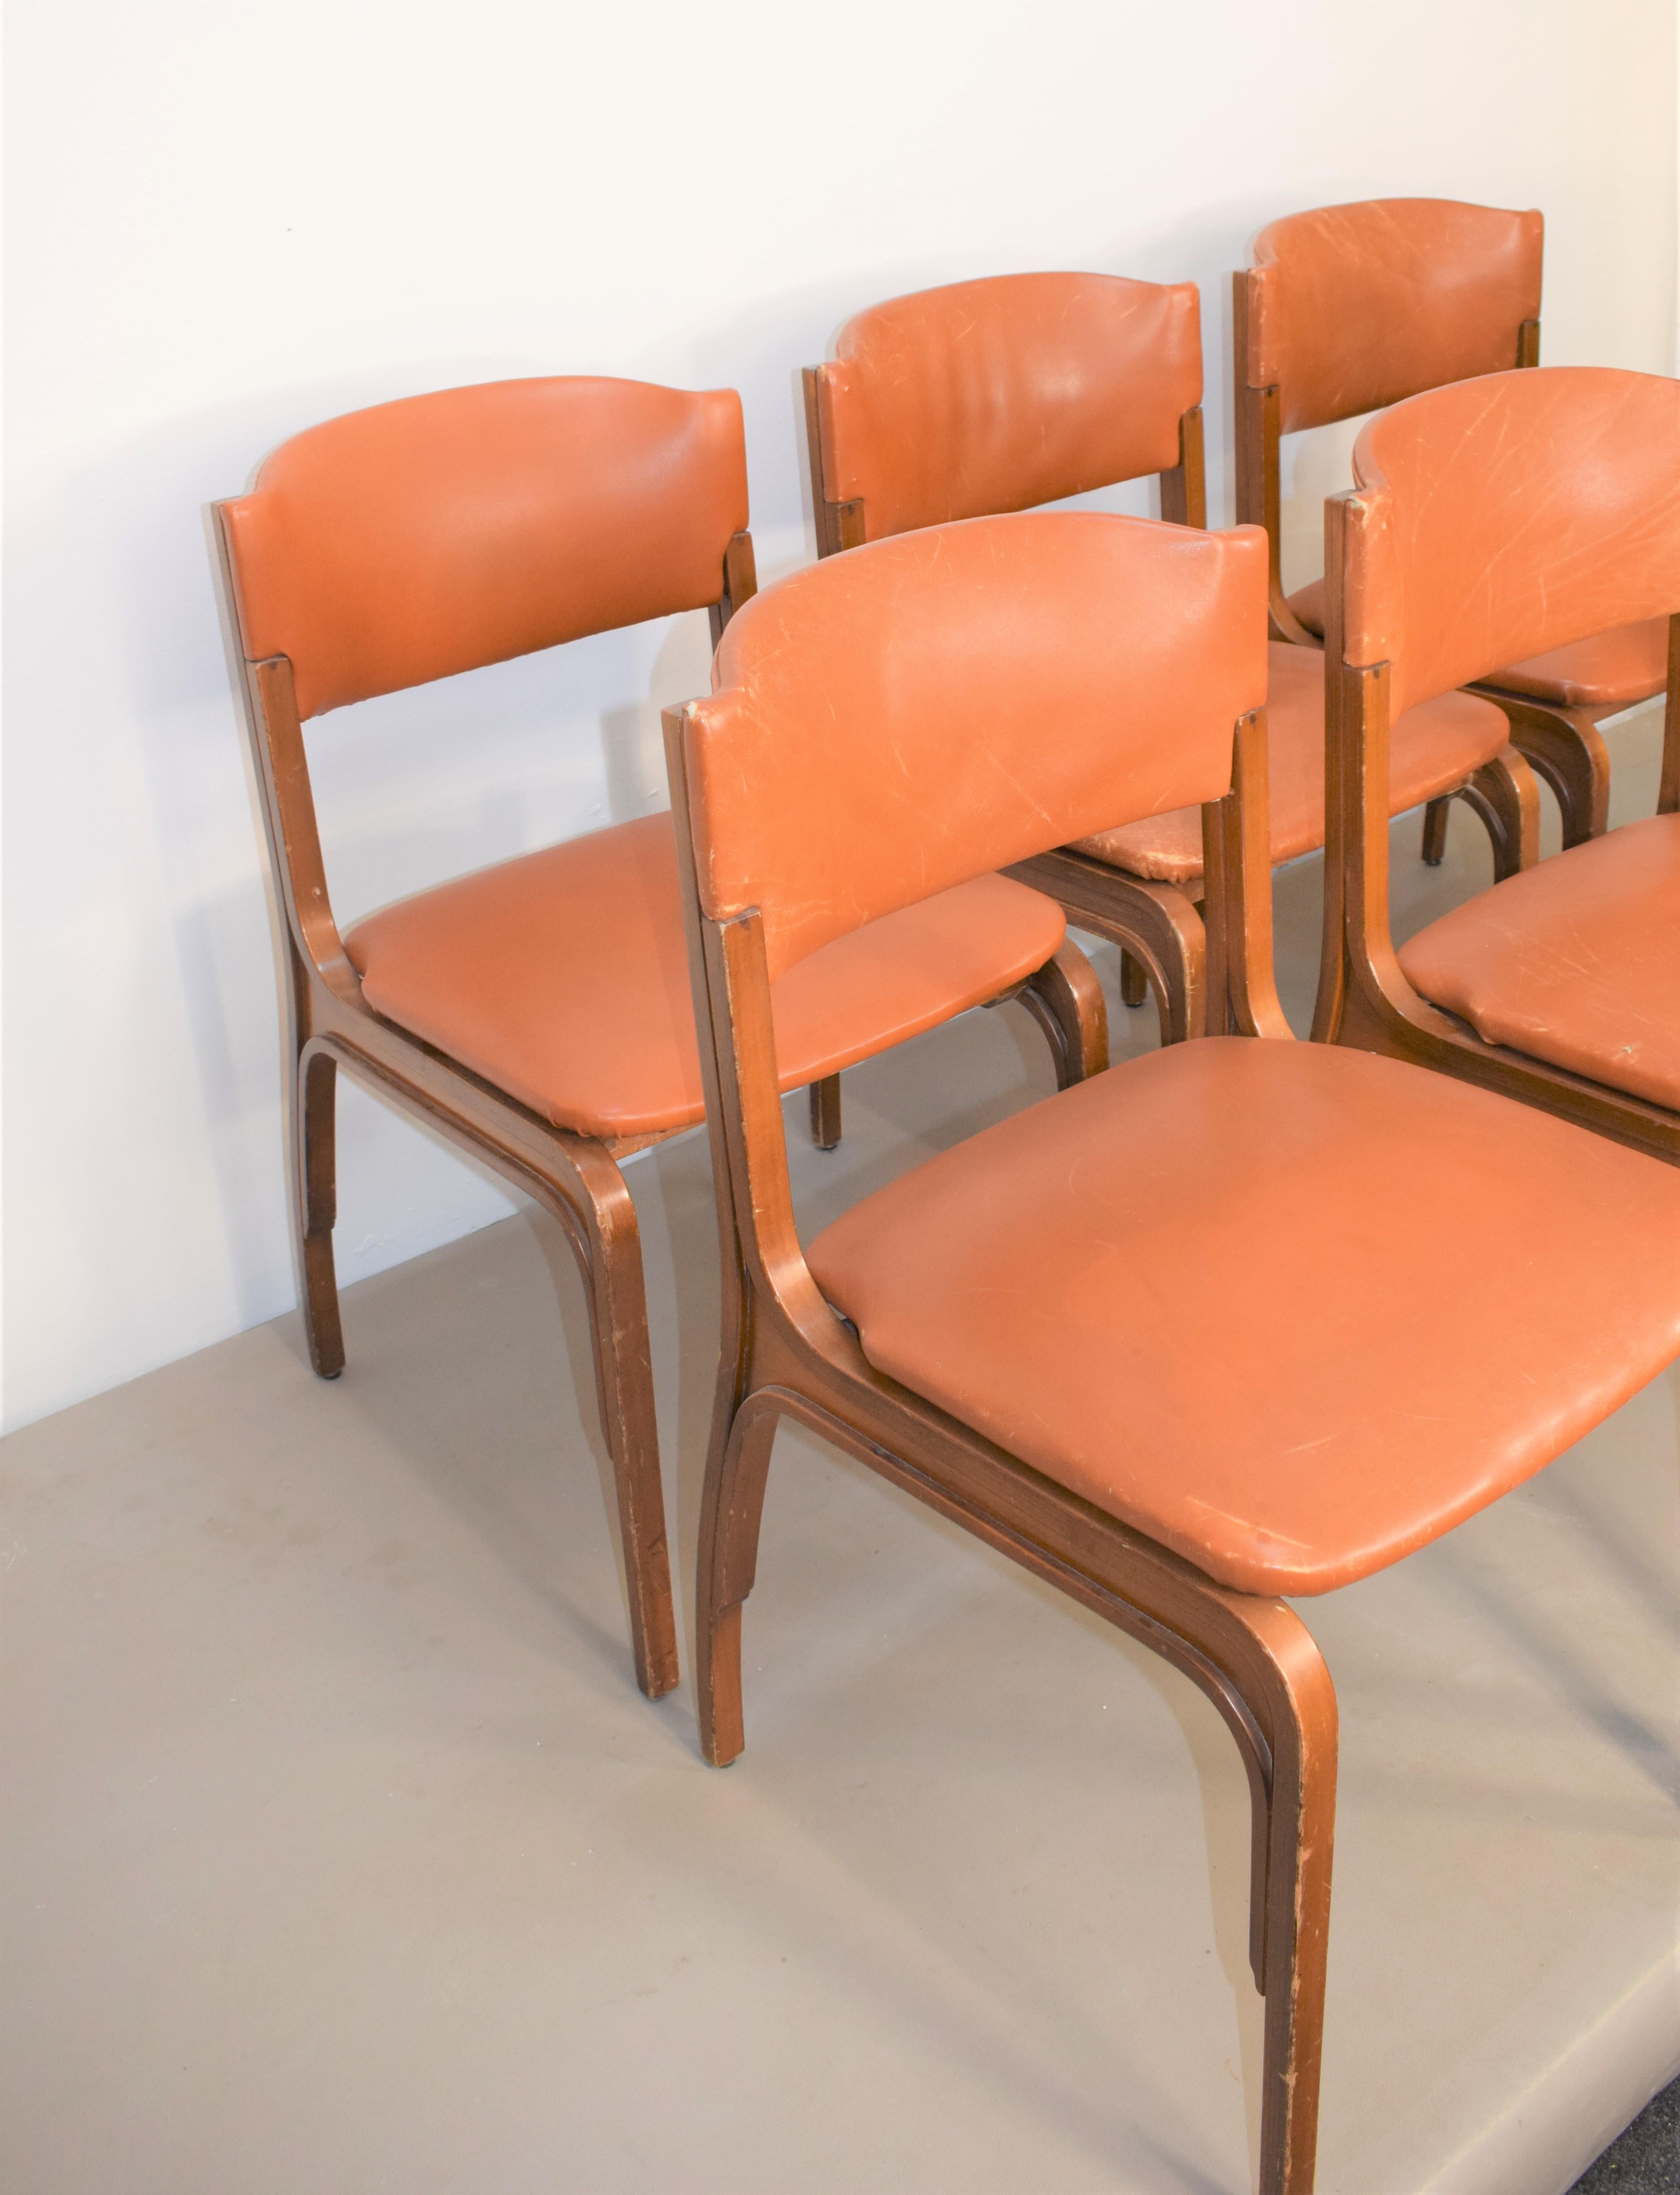 Gianfranco Frattini for Cantieri Carugati, set of six Italian chairs, 1950s.

Dimensions: H= 80 cm; W= 45 cm; D= 50 cm; Height seat = 46 cm.